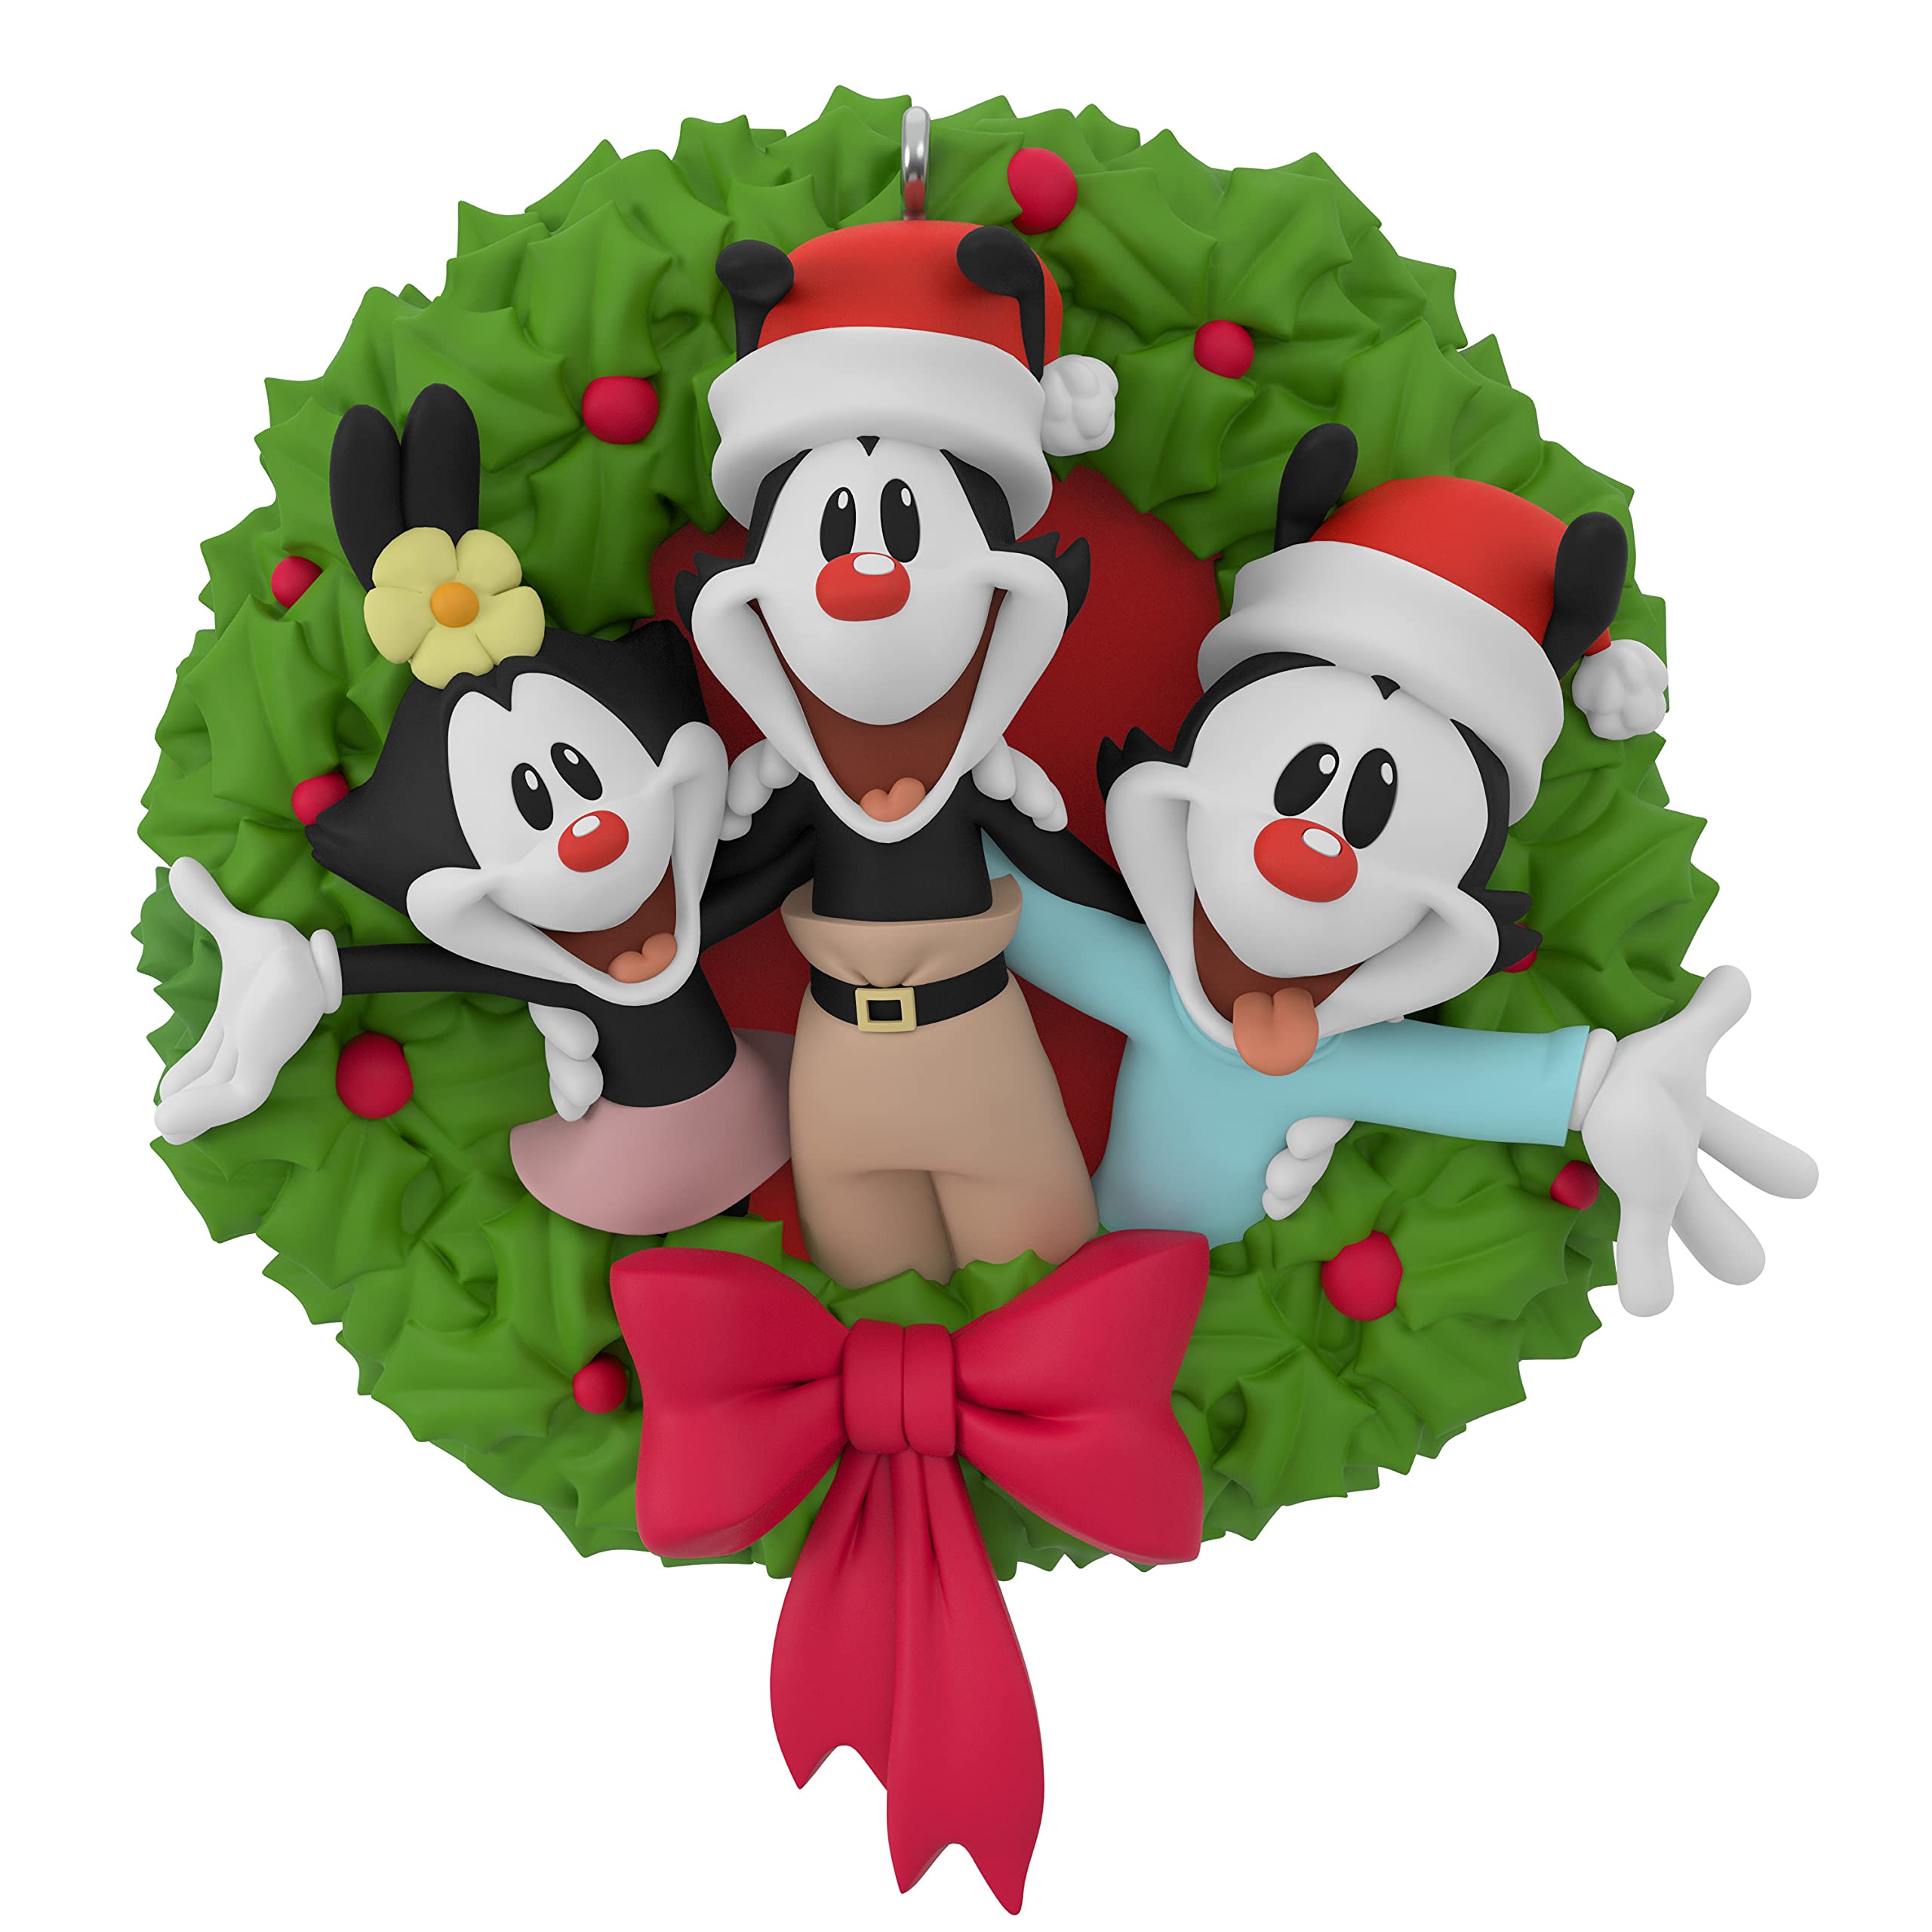 Hallmark Keepsake Christmas Ornament 2021, Animaniacs Merry to The Max